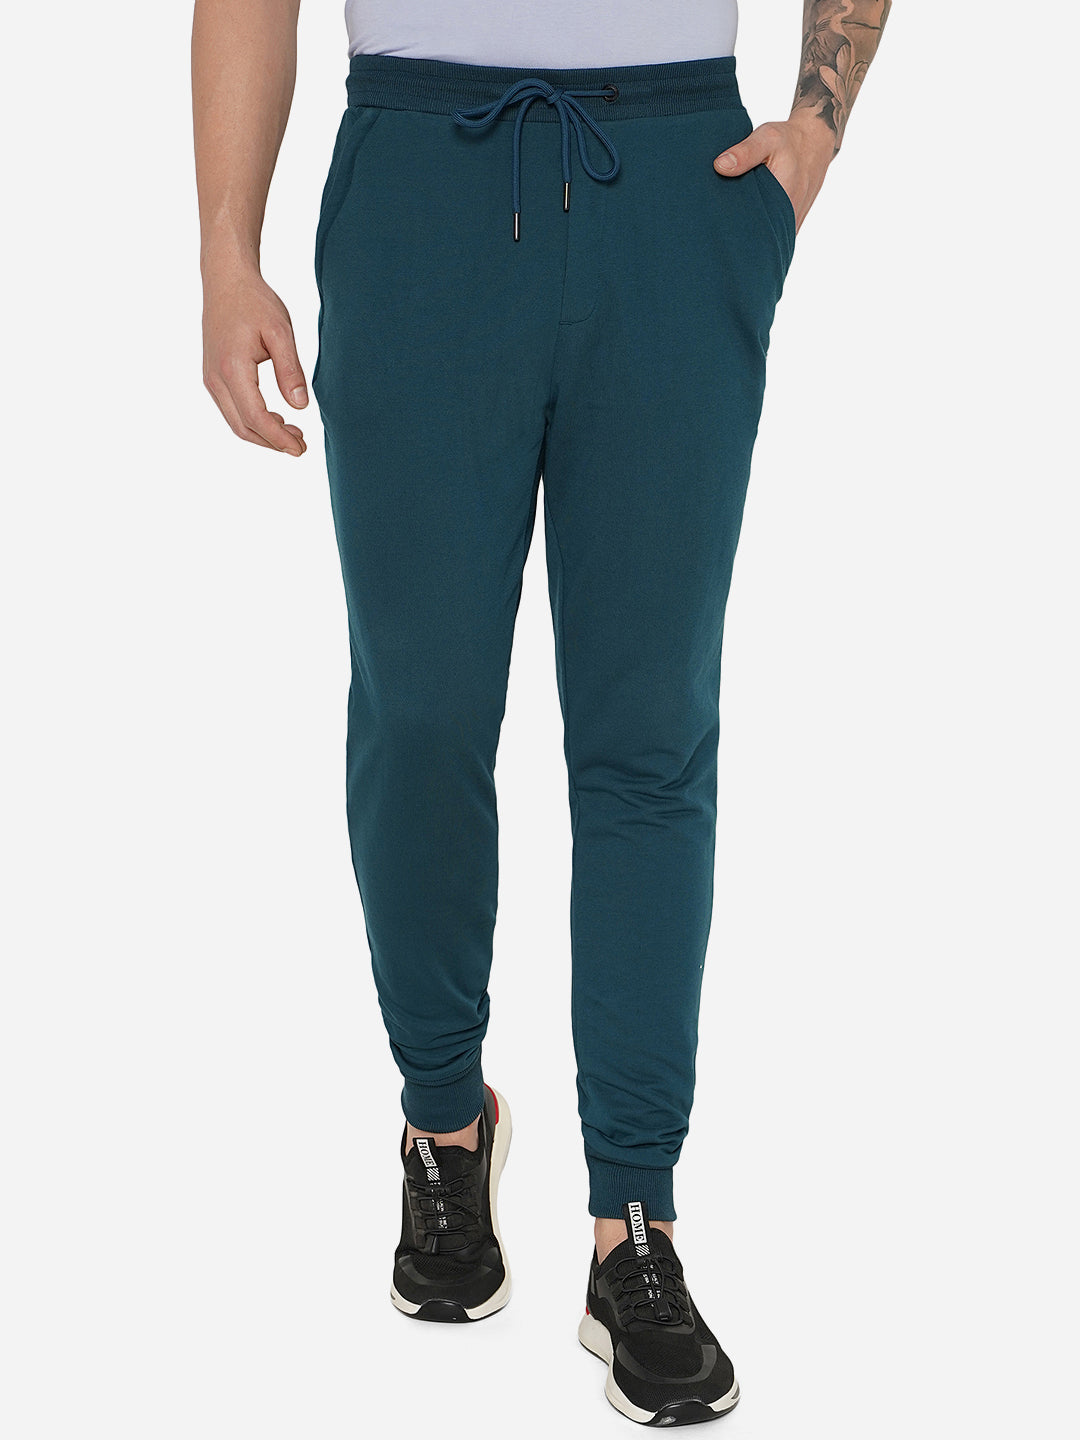 Australian Fit Track Pants with tape (White/Black) - Gabberwear